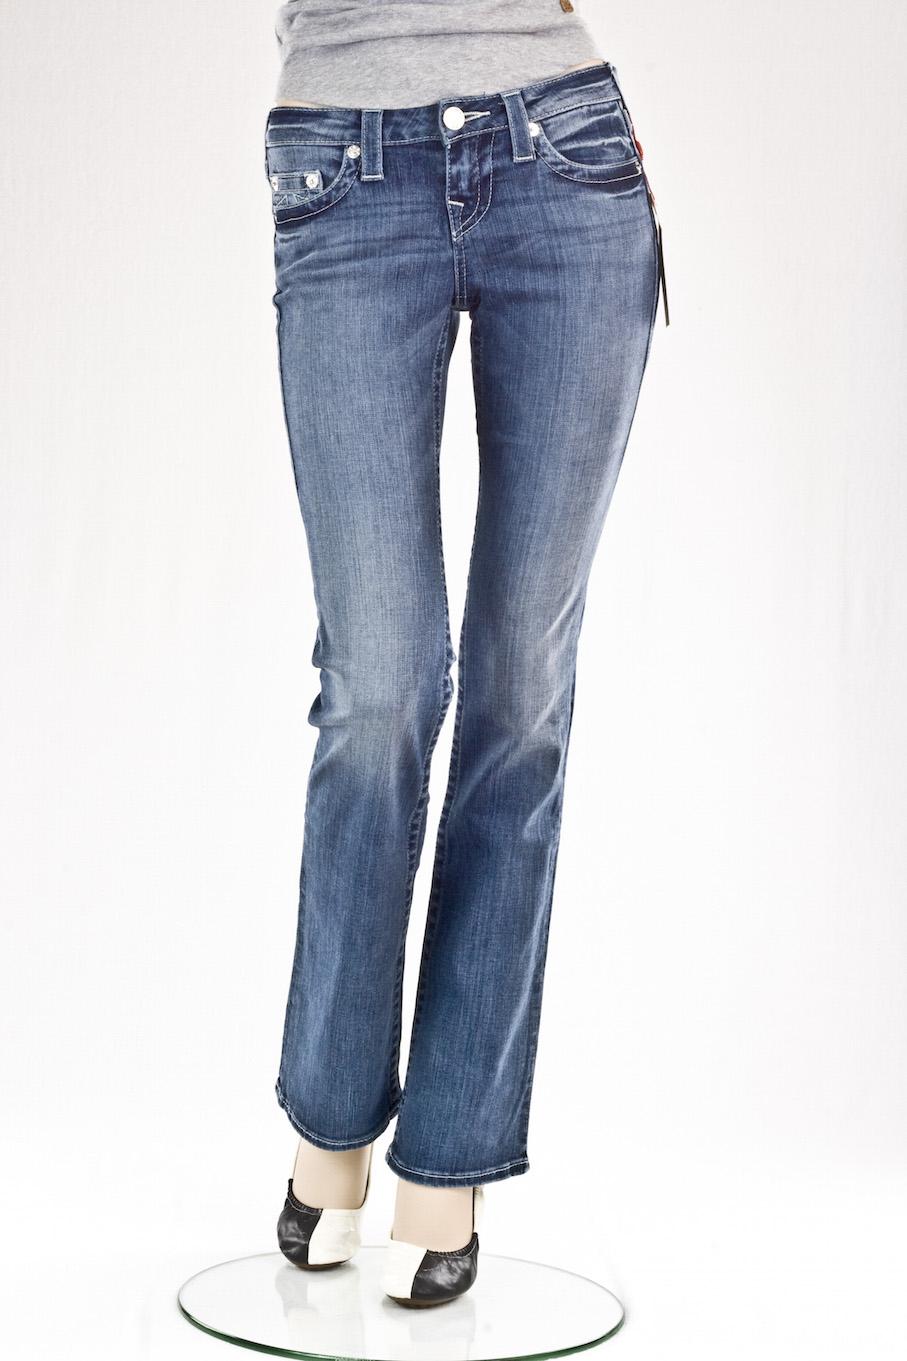 Женские джинсы True Religion "Буткат" bootcut no flaps natural sn интернет-магазин Fashion Jeans